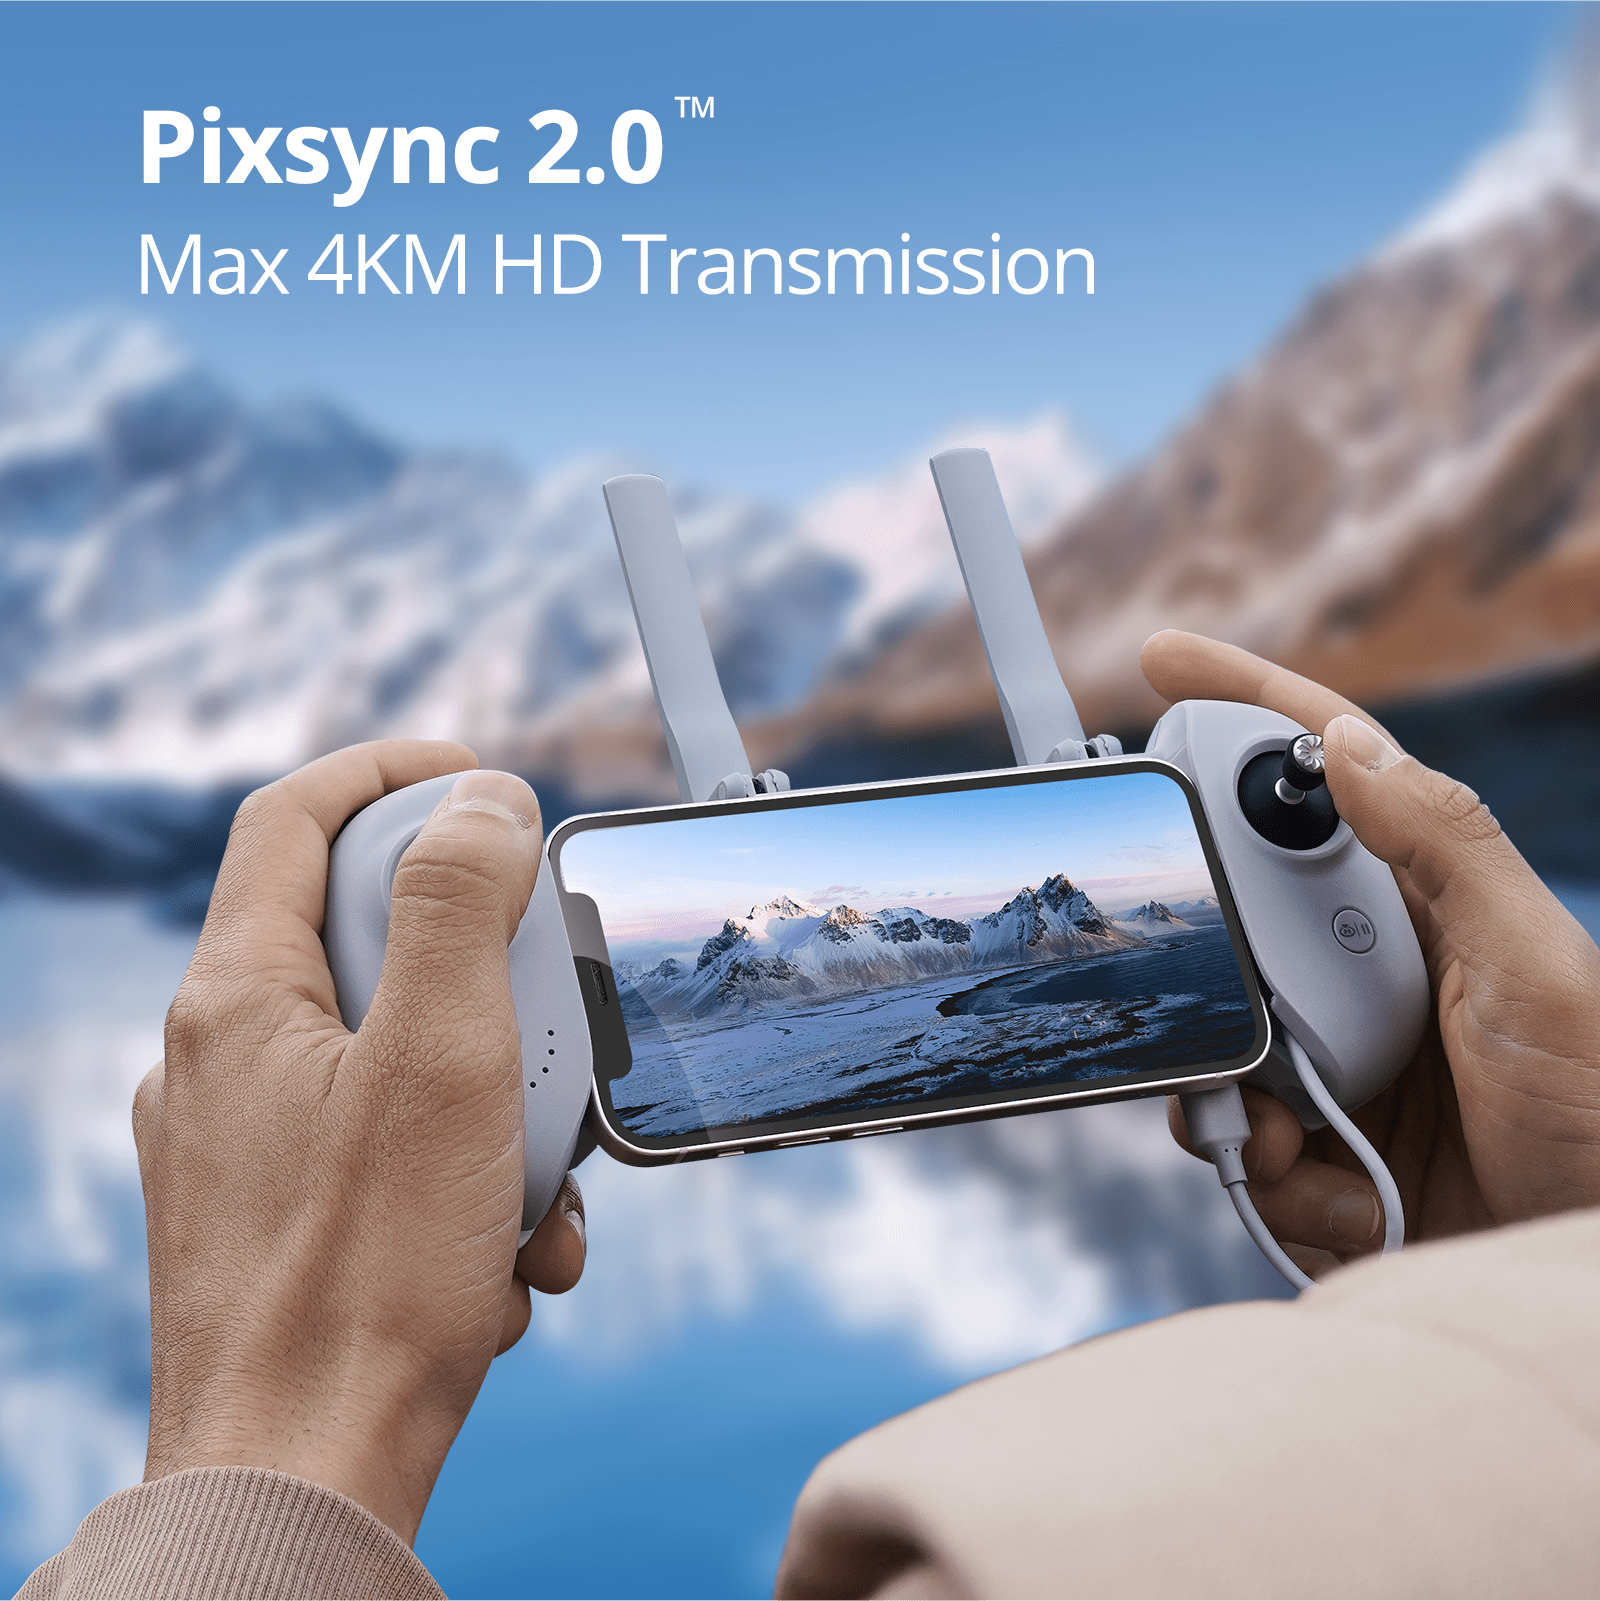 ATOM SE Sub 250g Foldable GPS Drone with 4K HD EIS Camera